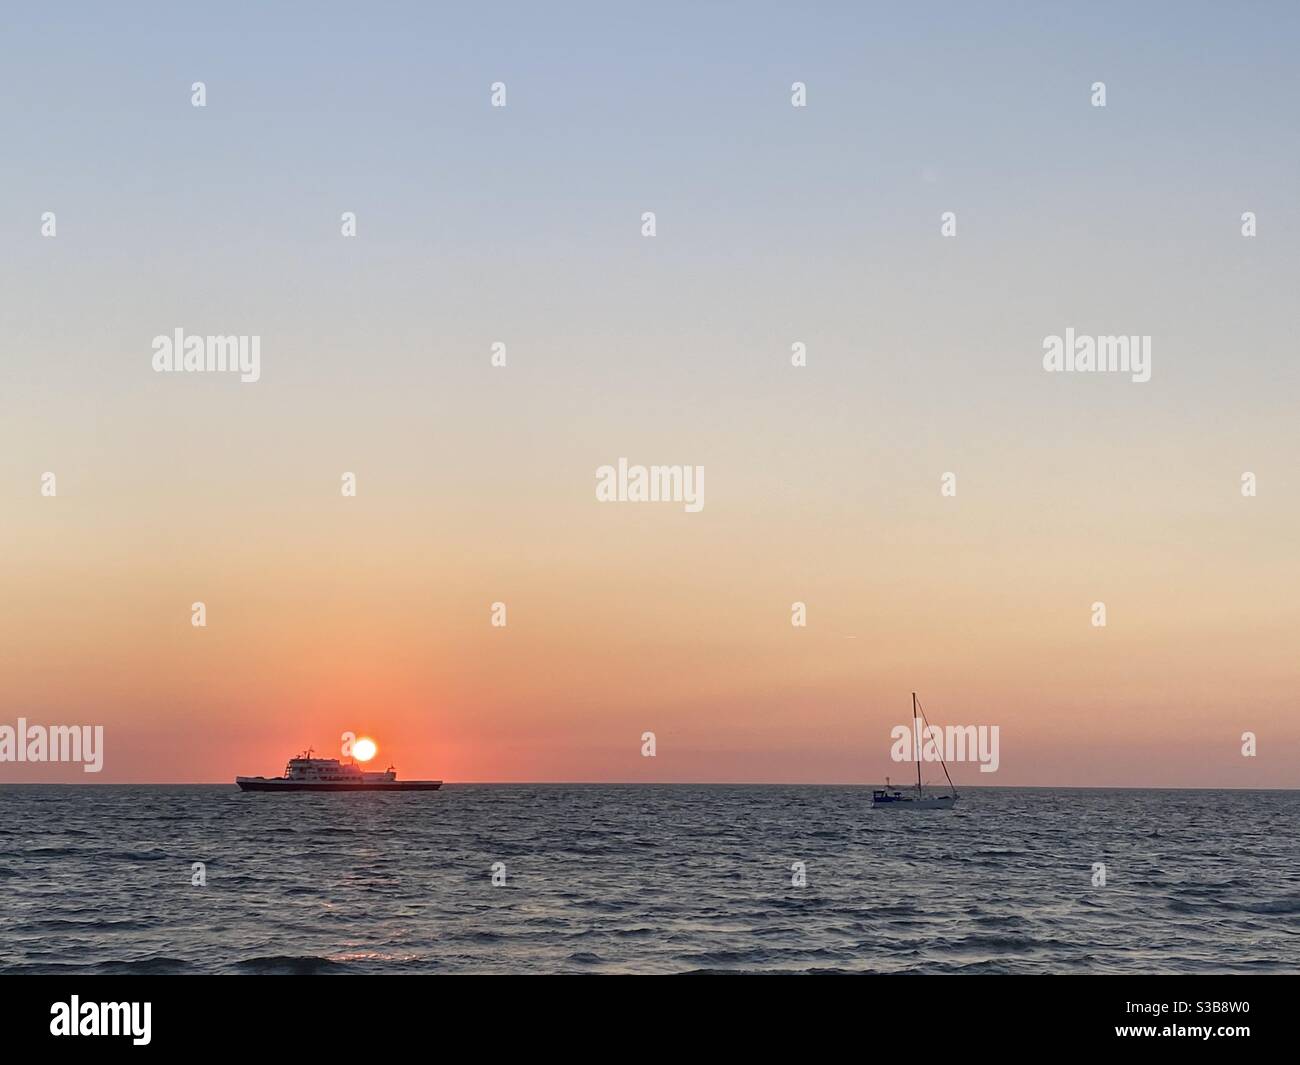 Hatteras-Ocracoke Ferry at sunset on Pamlico Sound. Stock Photo